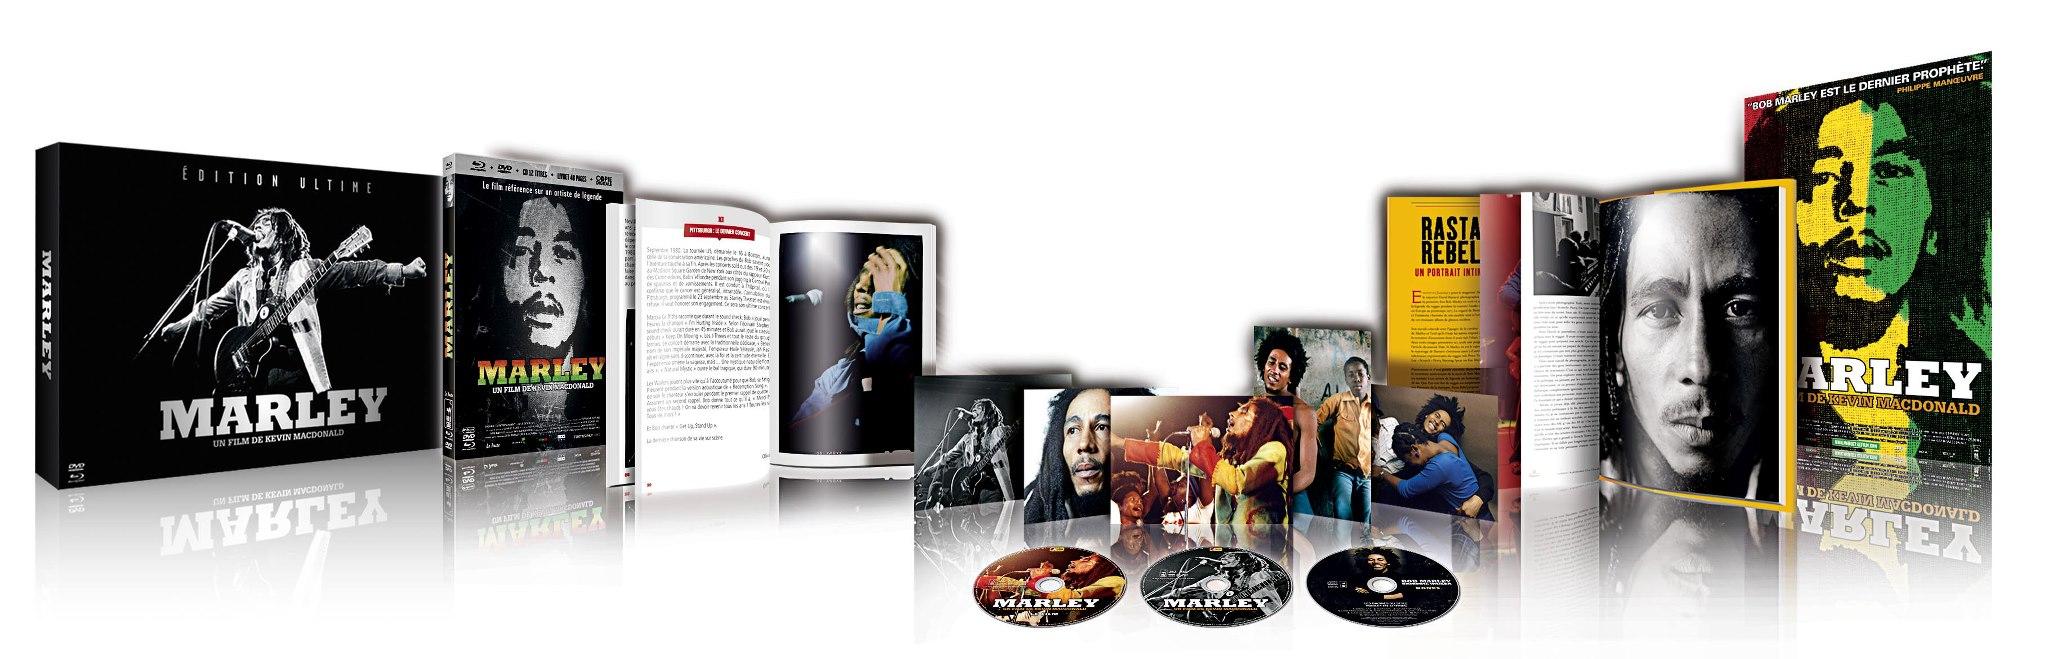 Marley, Le Film : Sortie en DVD, Blu-Ray et VOD